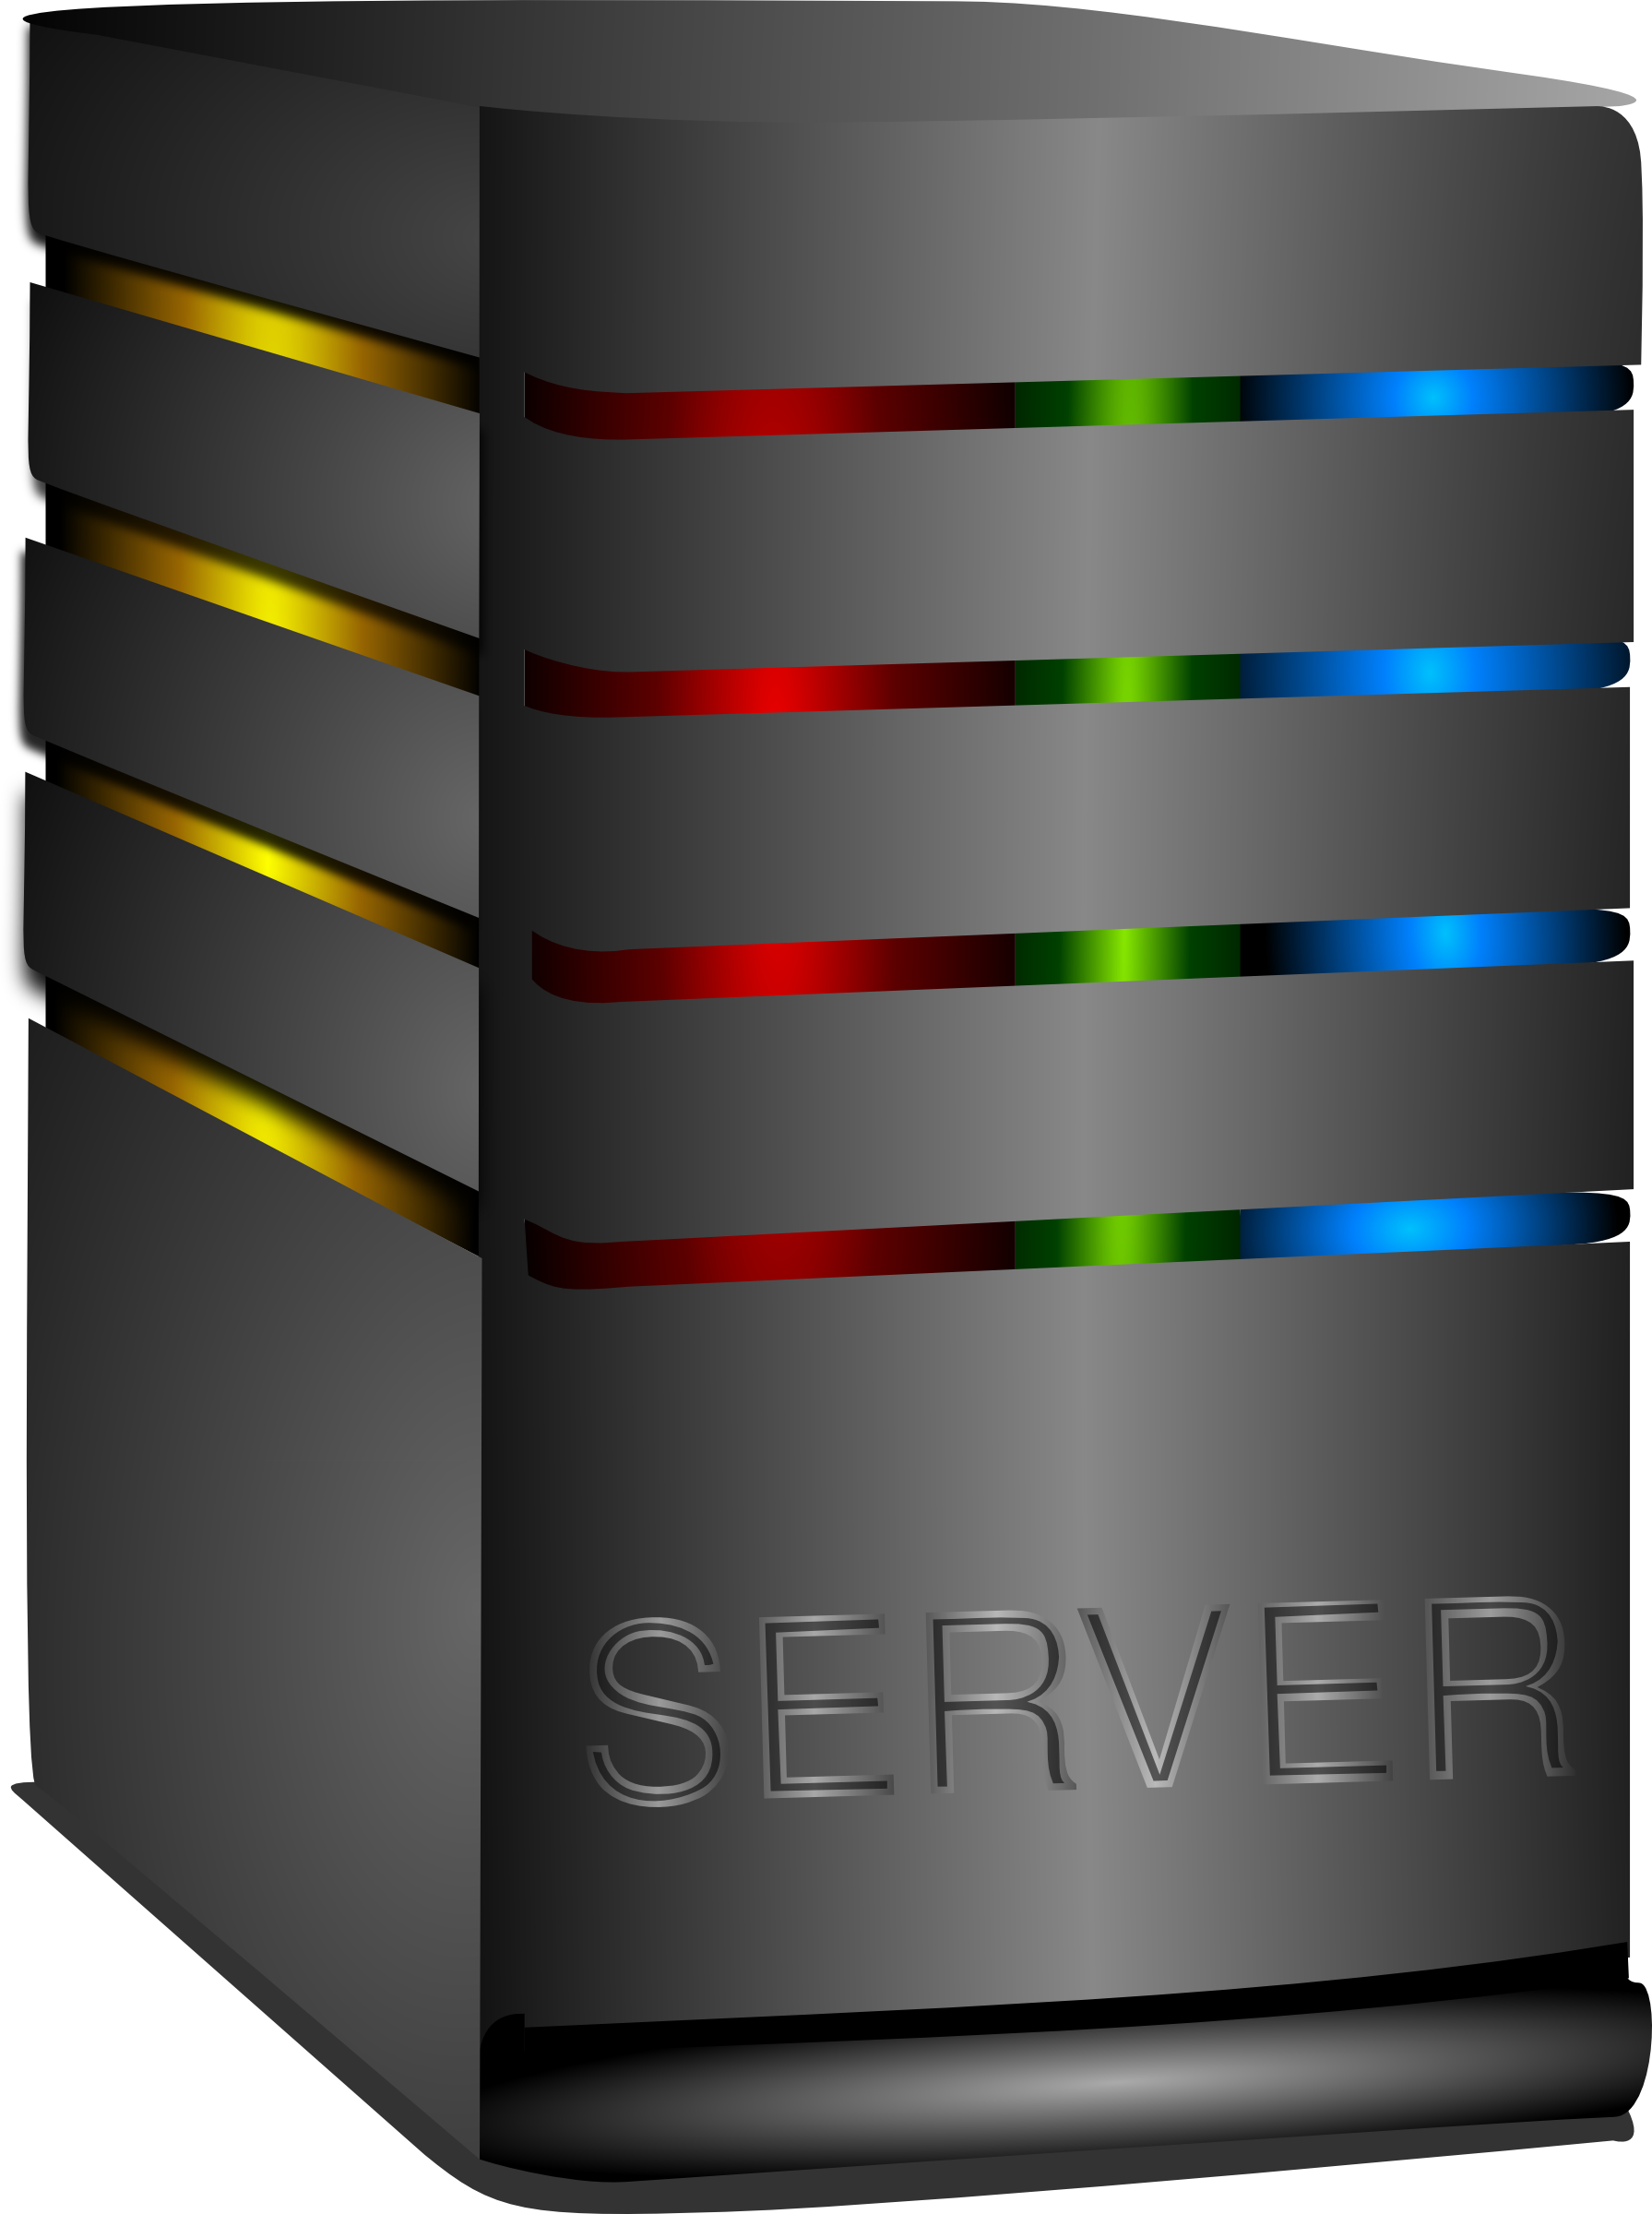 Server #3